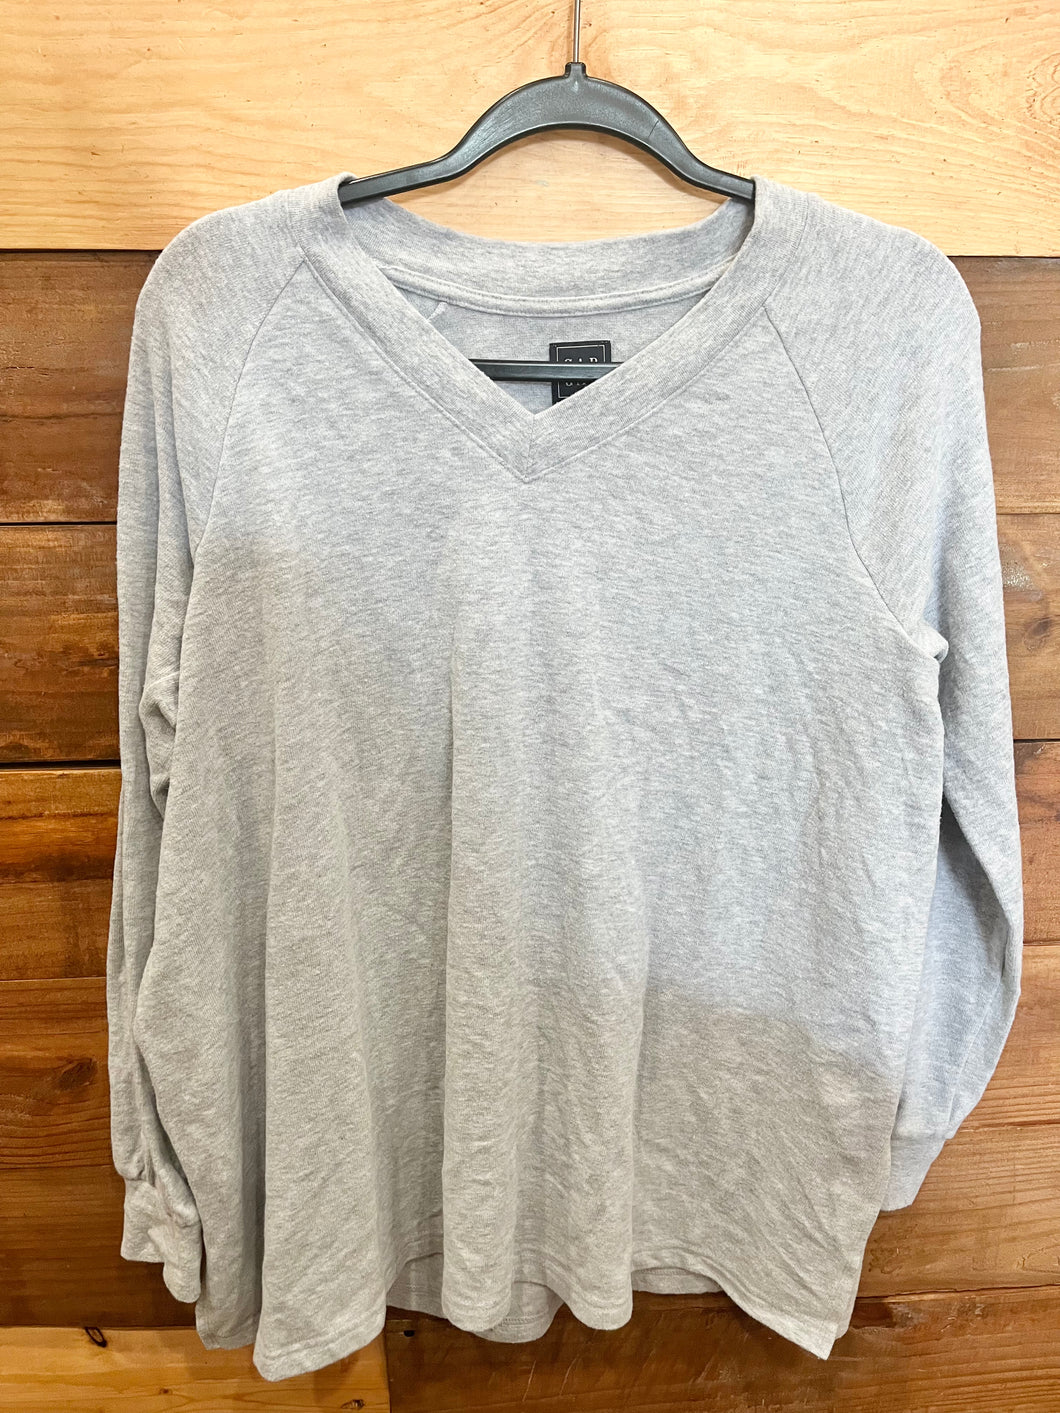 Gap Maternity & Nursing Gray Sweater Size Small